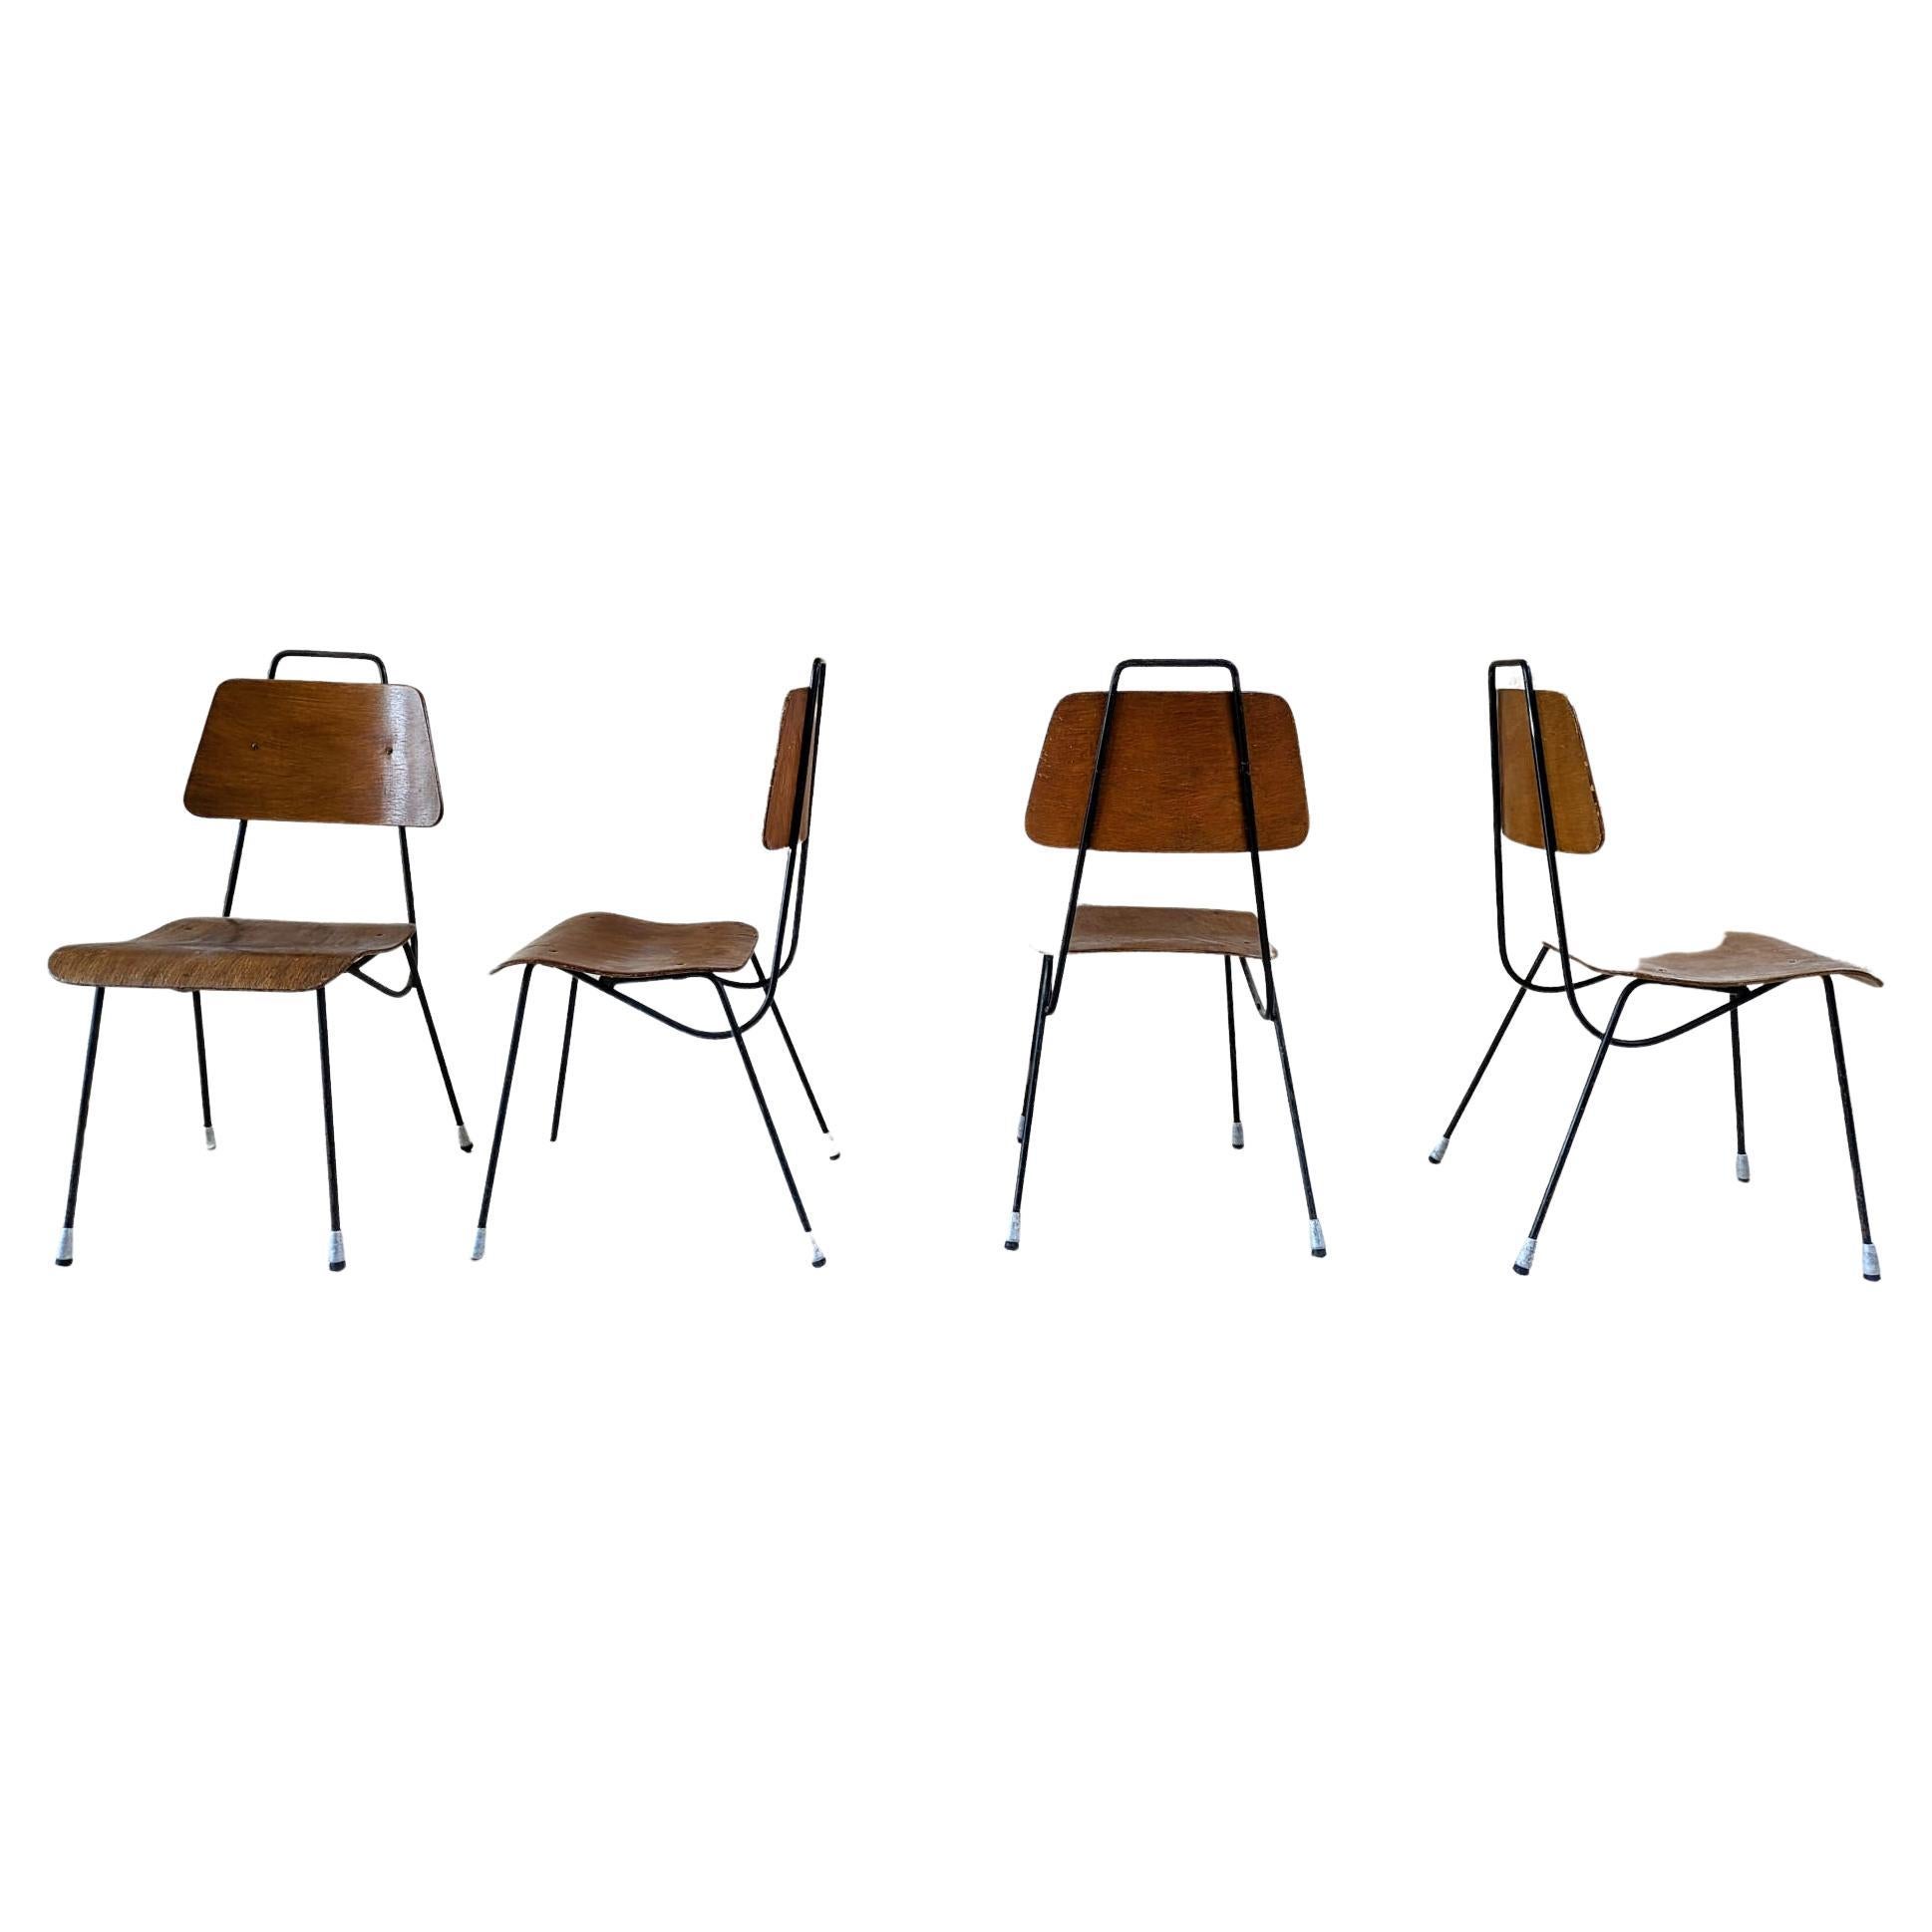 Set of 4 Chairs by Antoni De Moragas 1950s